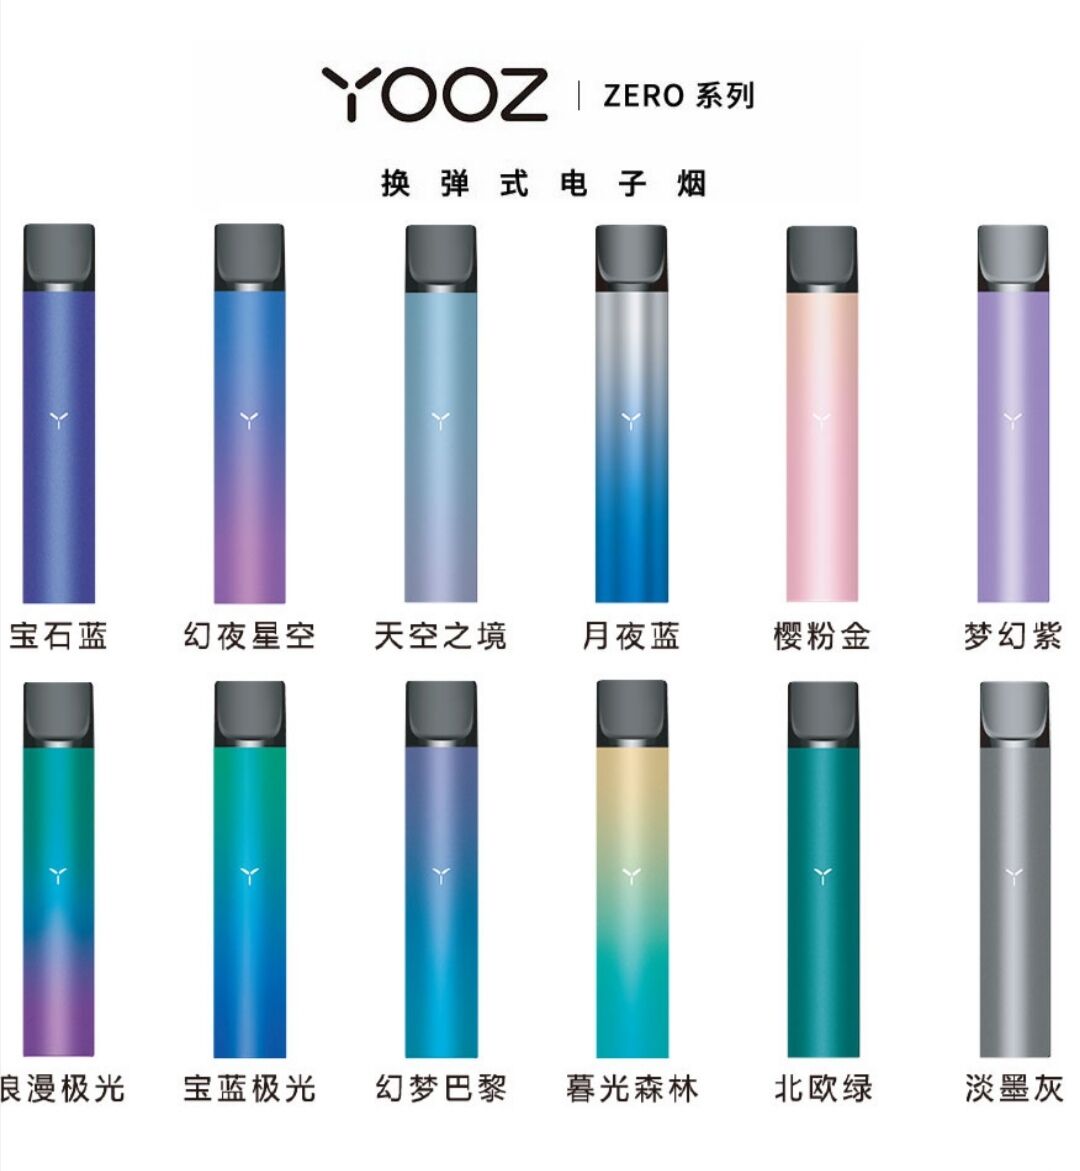 yooz柚子不断改善和升级,目前属于电子烟行业色系最多的产品,确实二